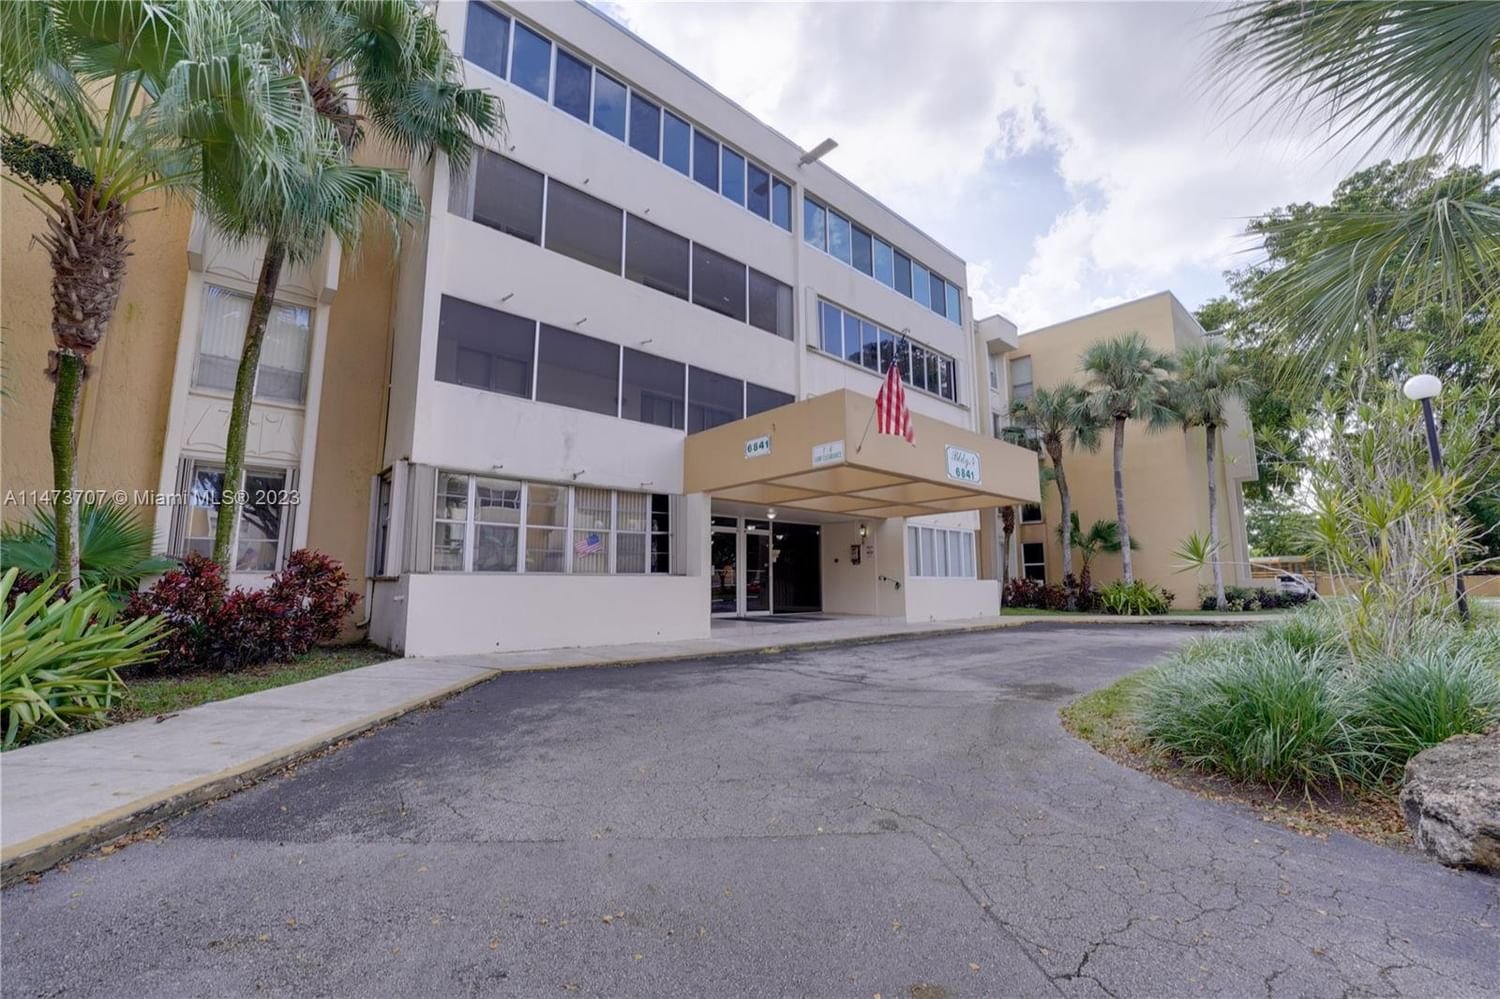 Real estate property located at 6841 147th Ave #3C, Miami-Dade County, SOVEREIGNS CONDO, Miami, FL